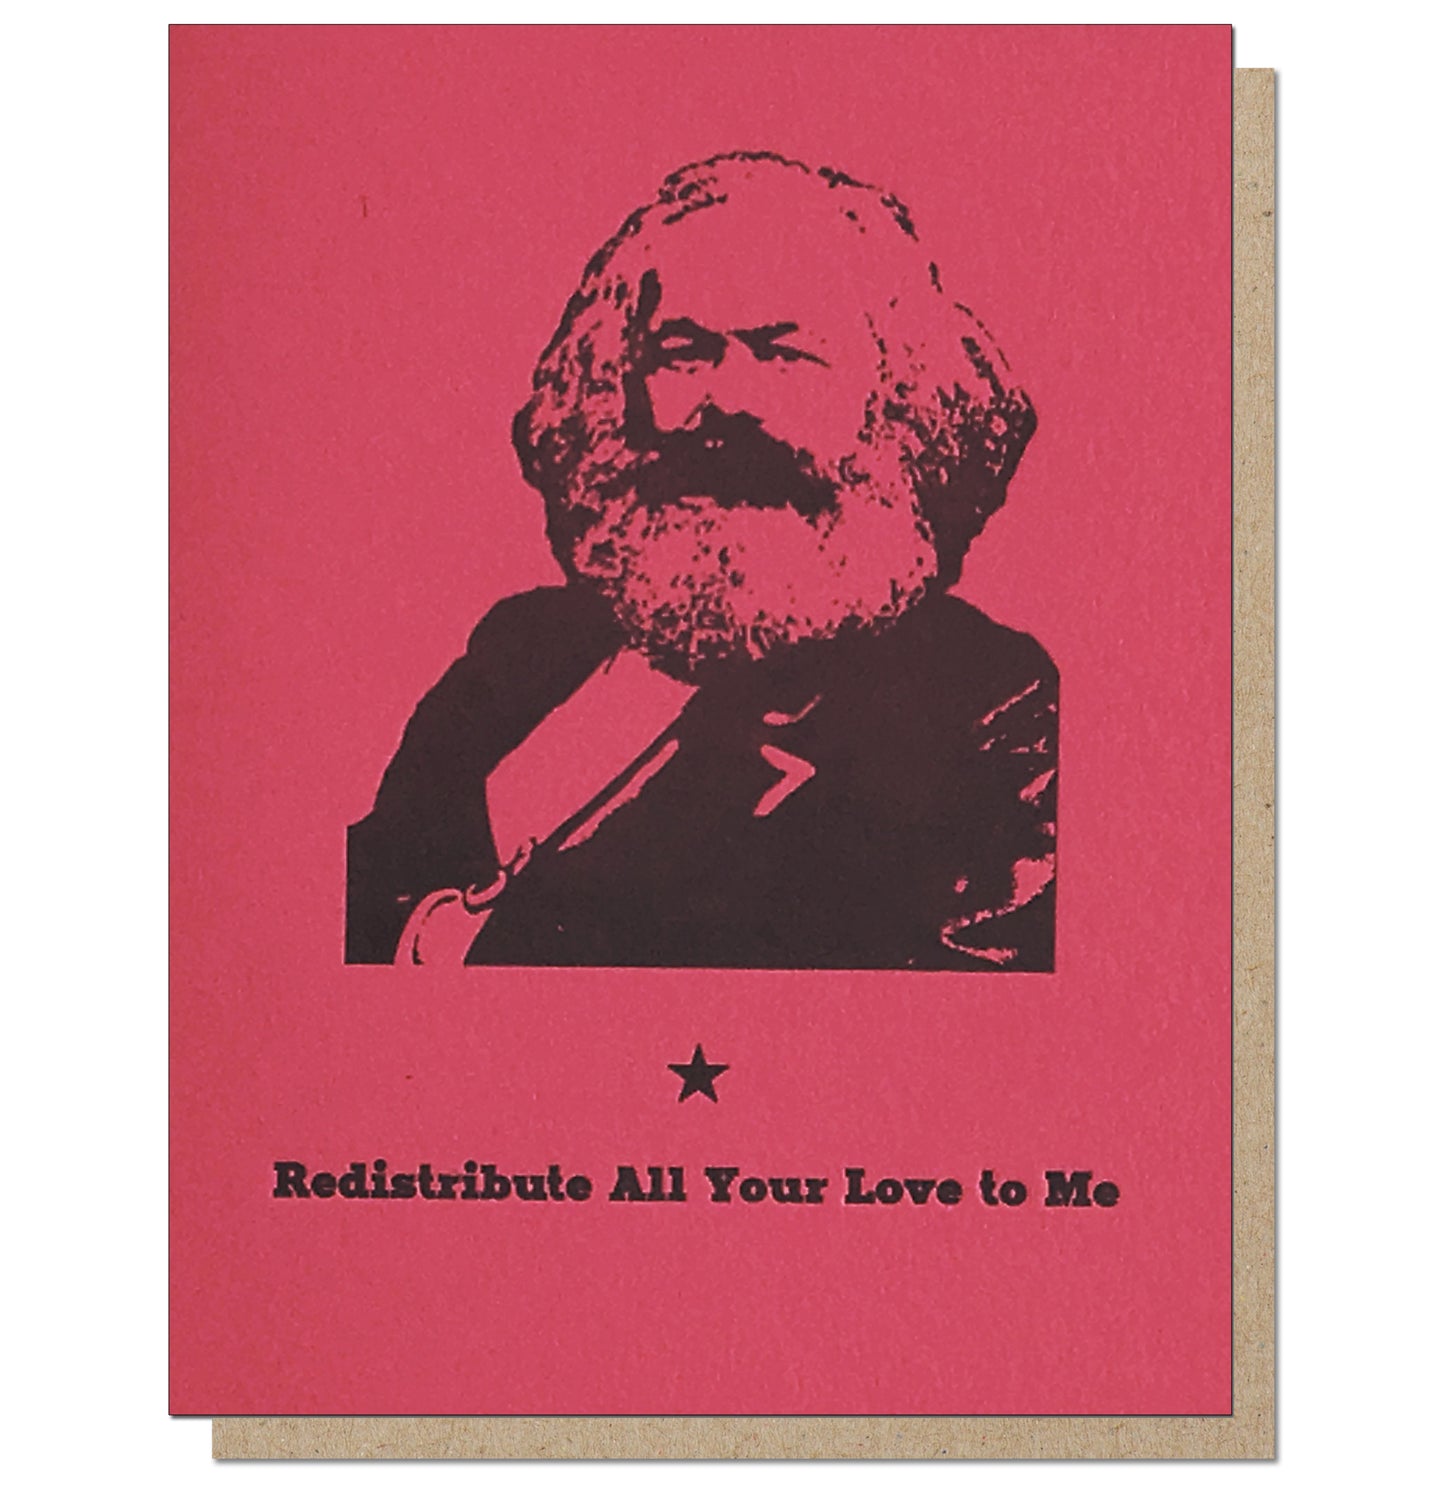 Redistribute your Love